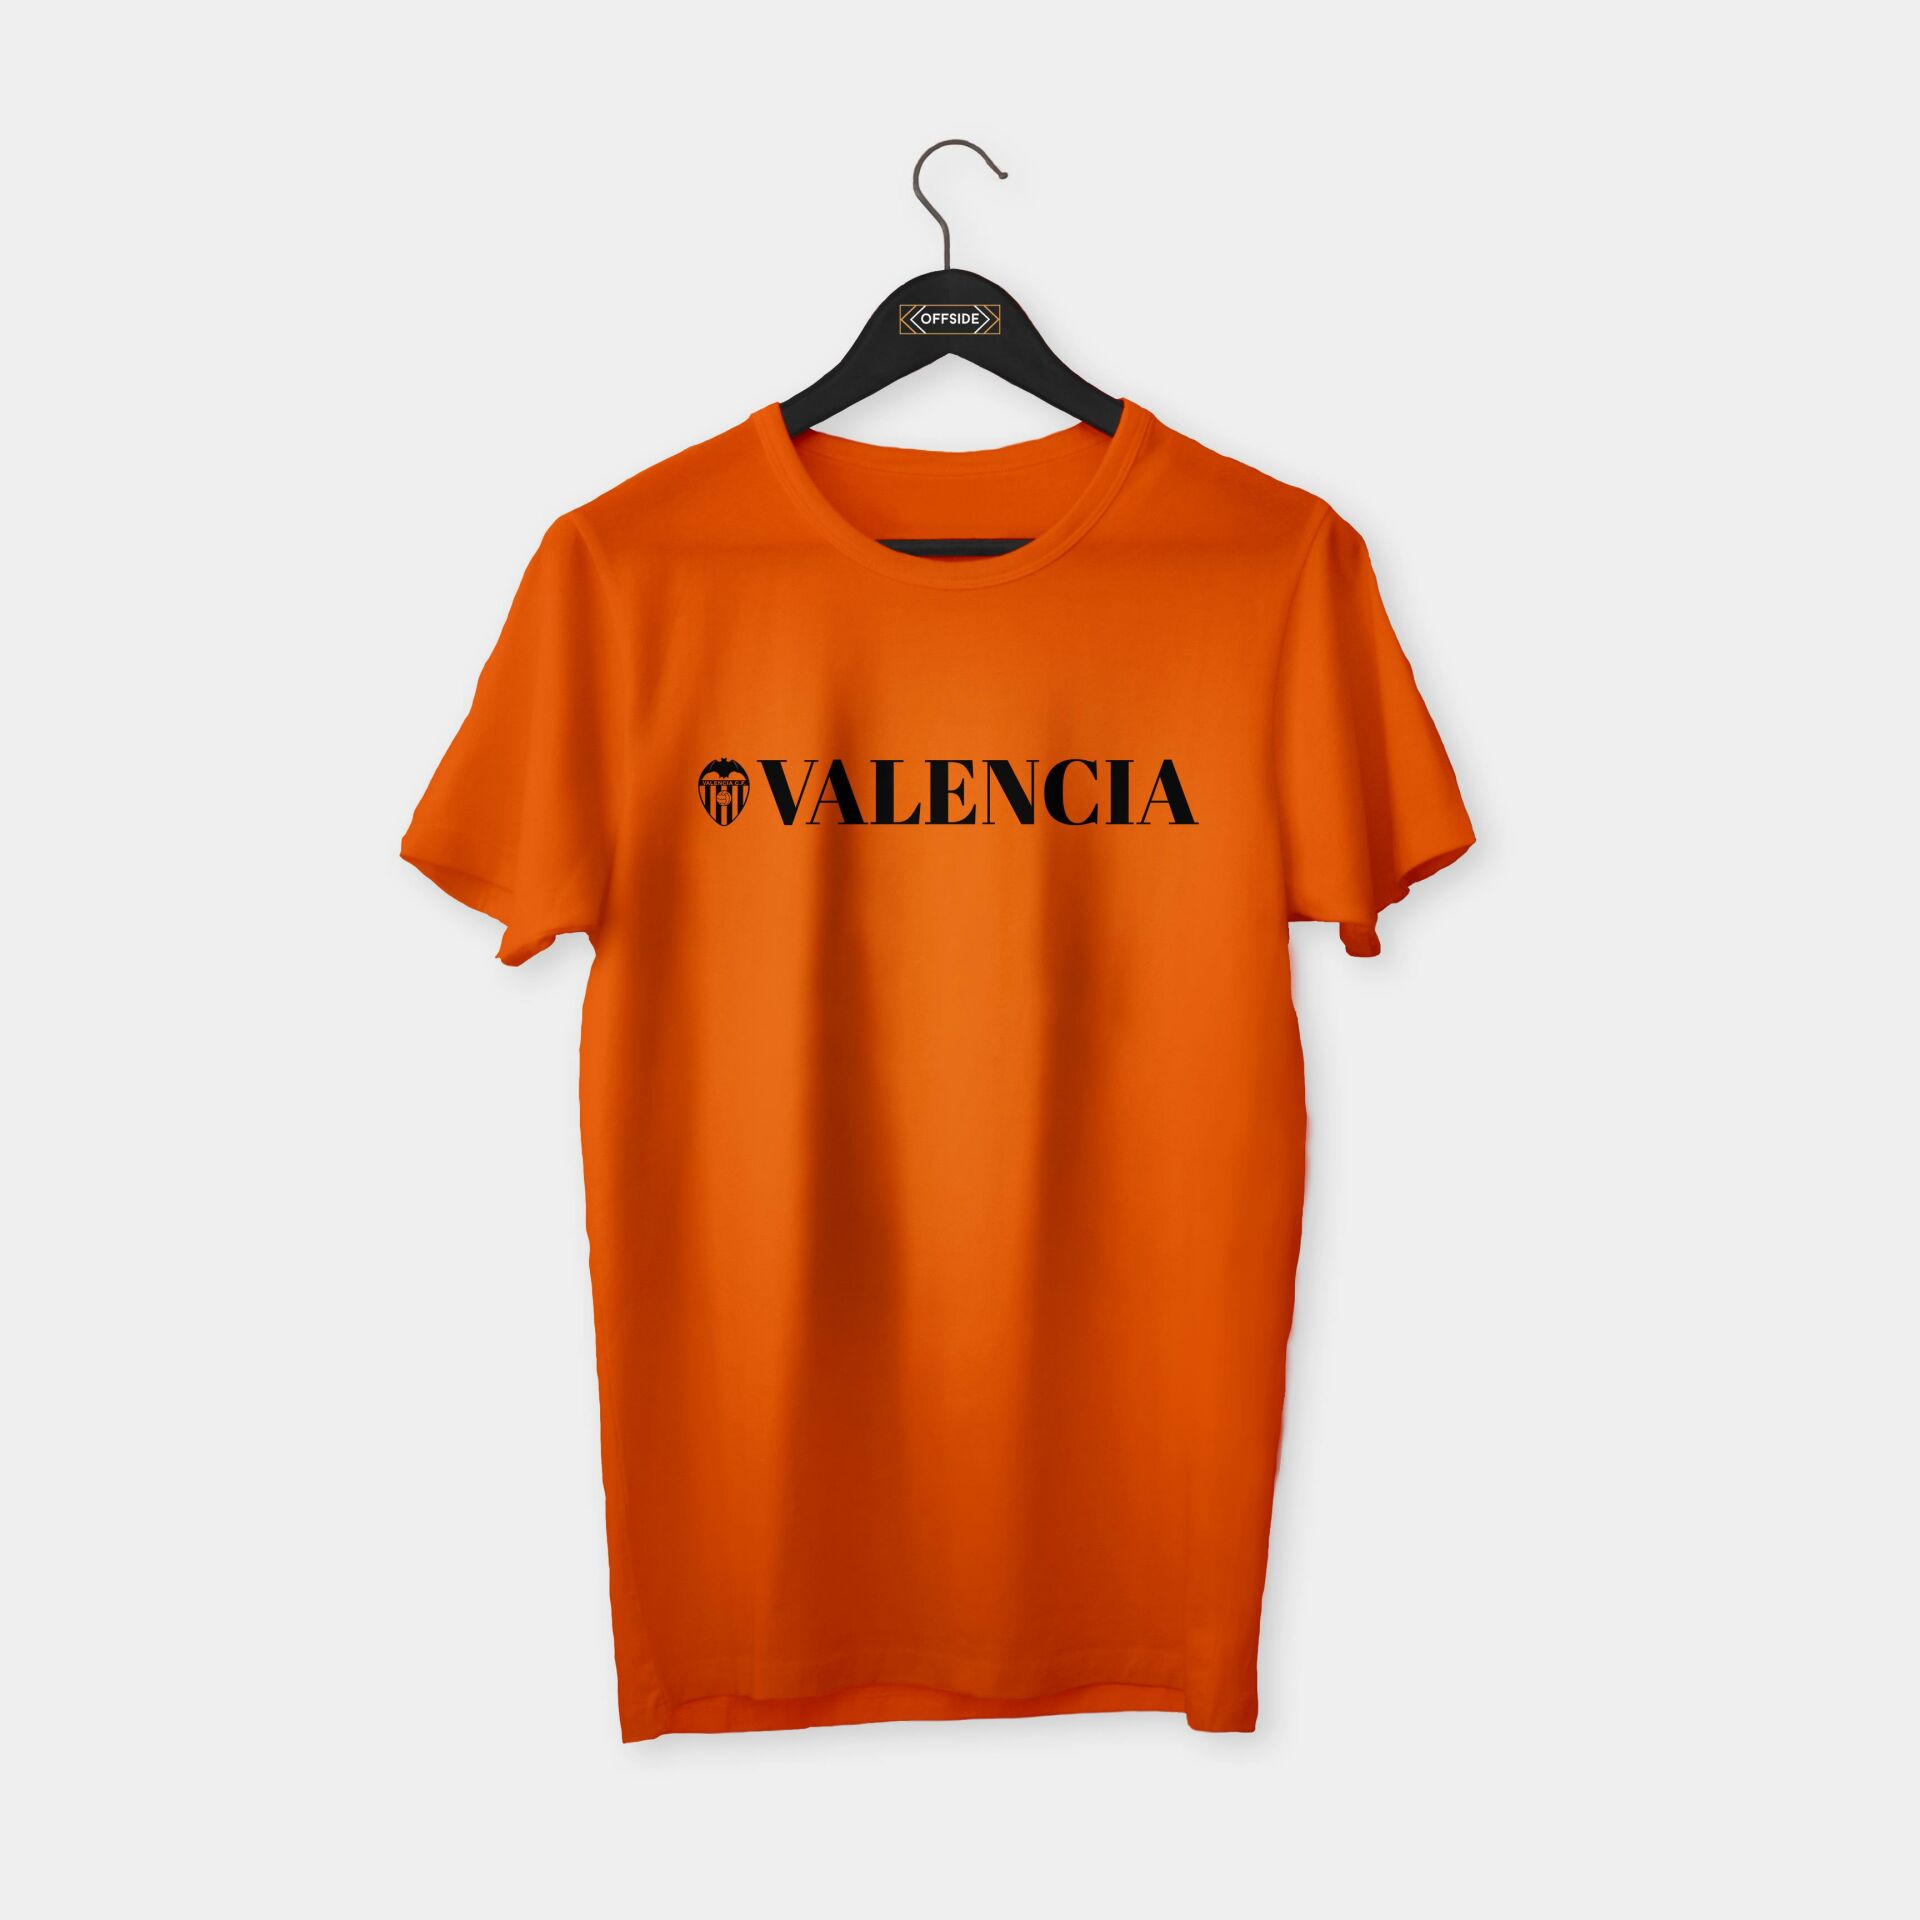 Valencia T-shirt